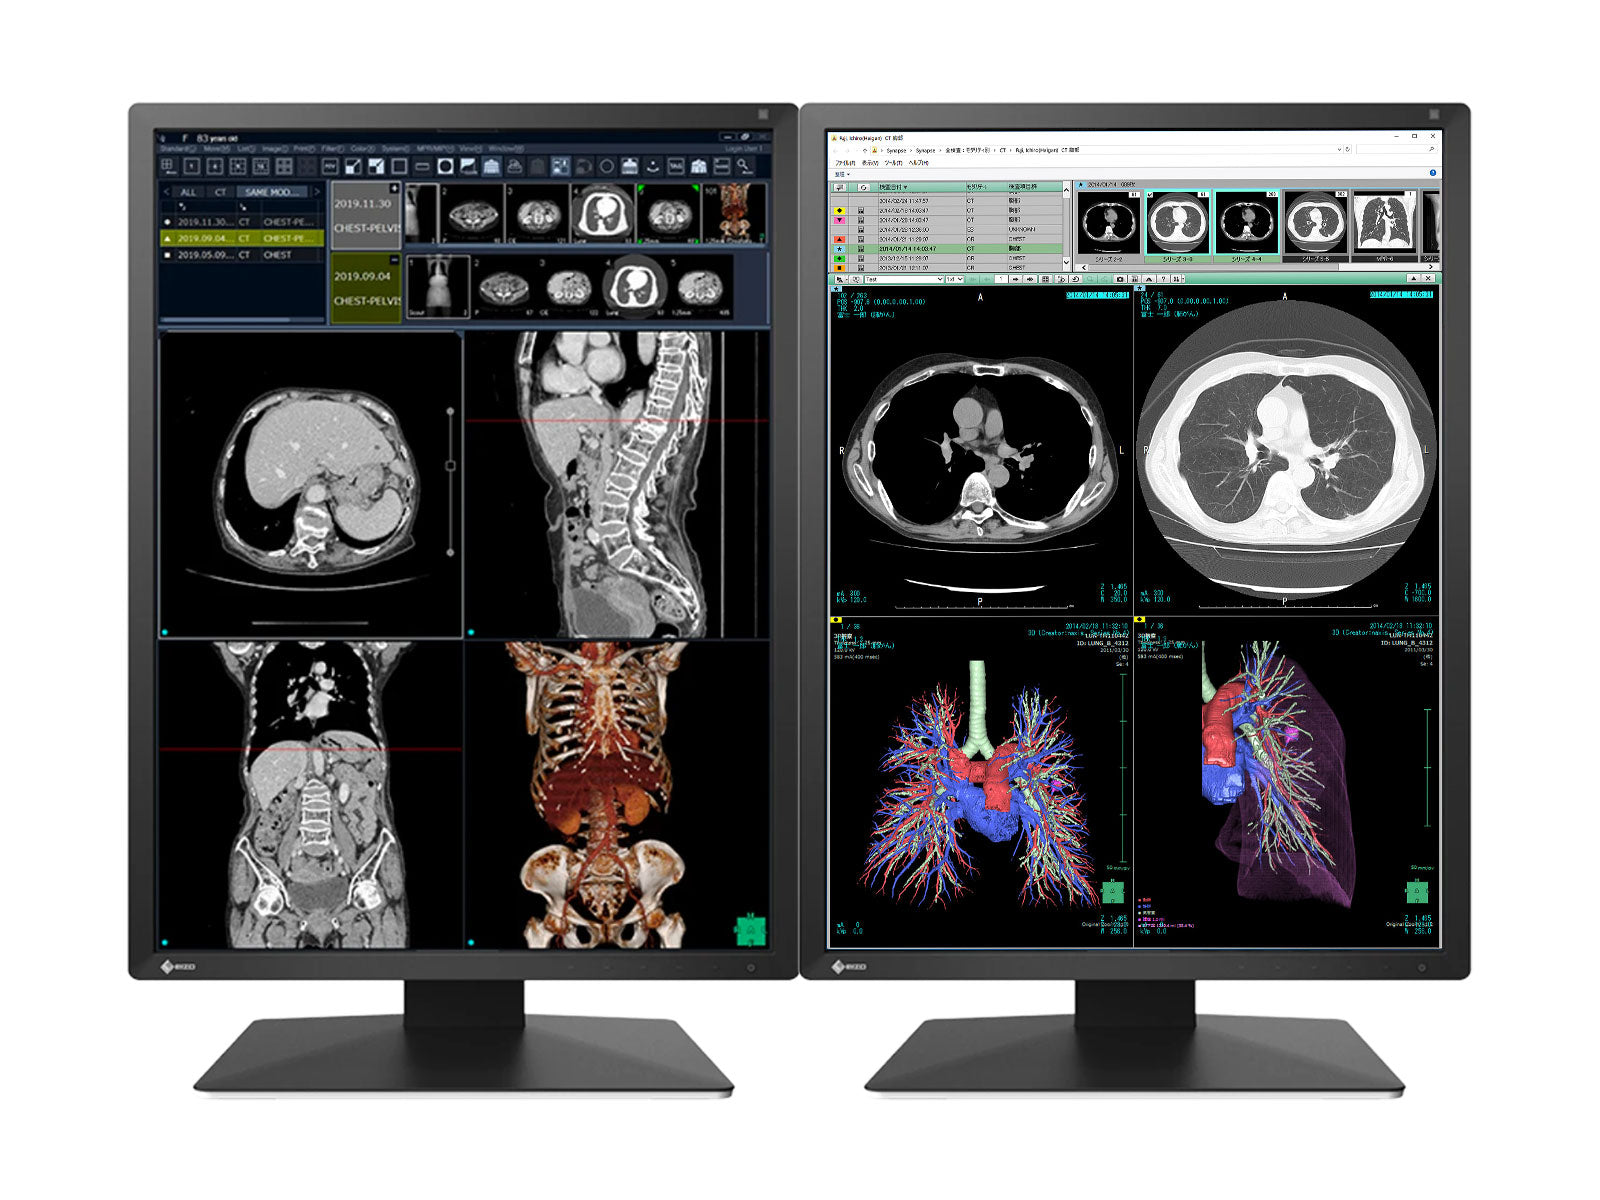 Eizo RadiForce RX270 2MP 21" Color LED Medical Diagnostic Radiology Display Monitor (RX270-BK) Monitors.com 